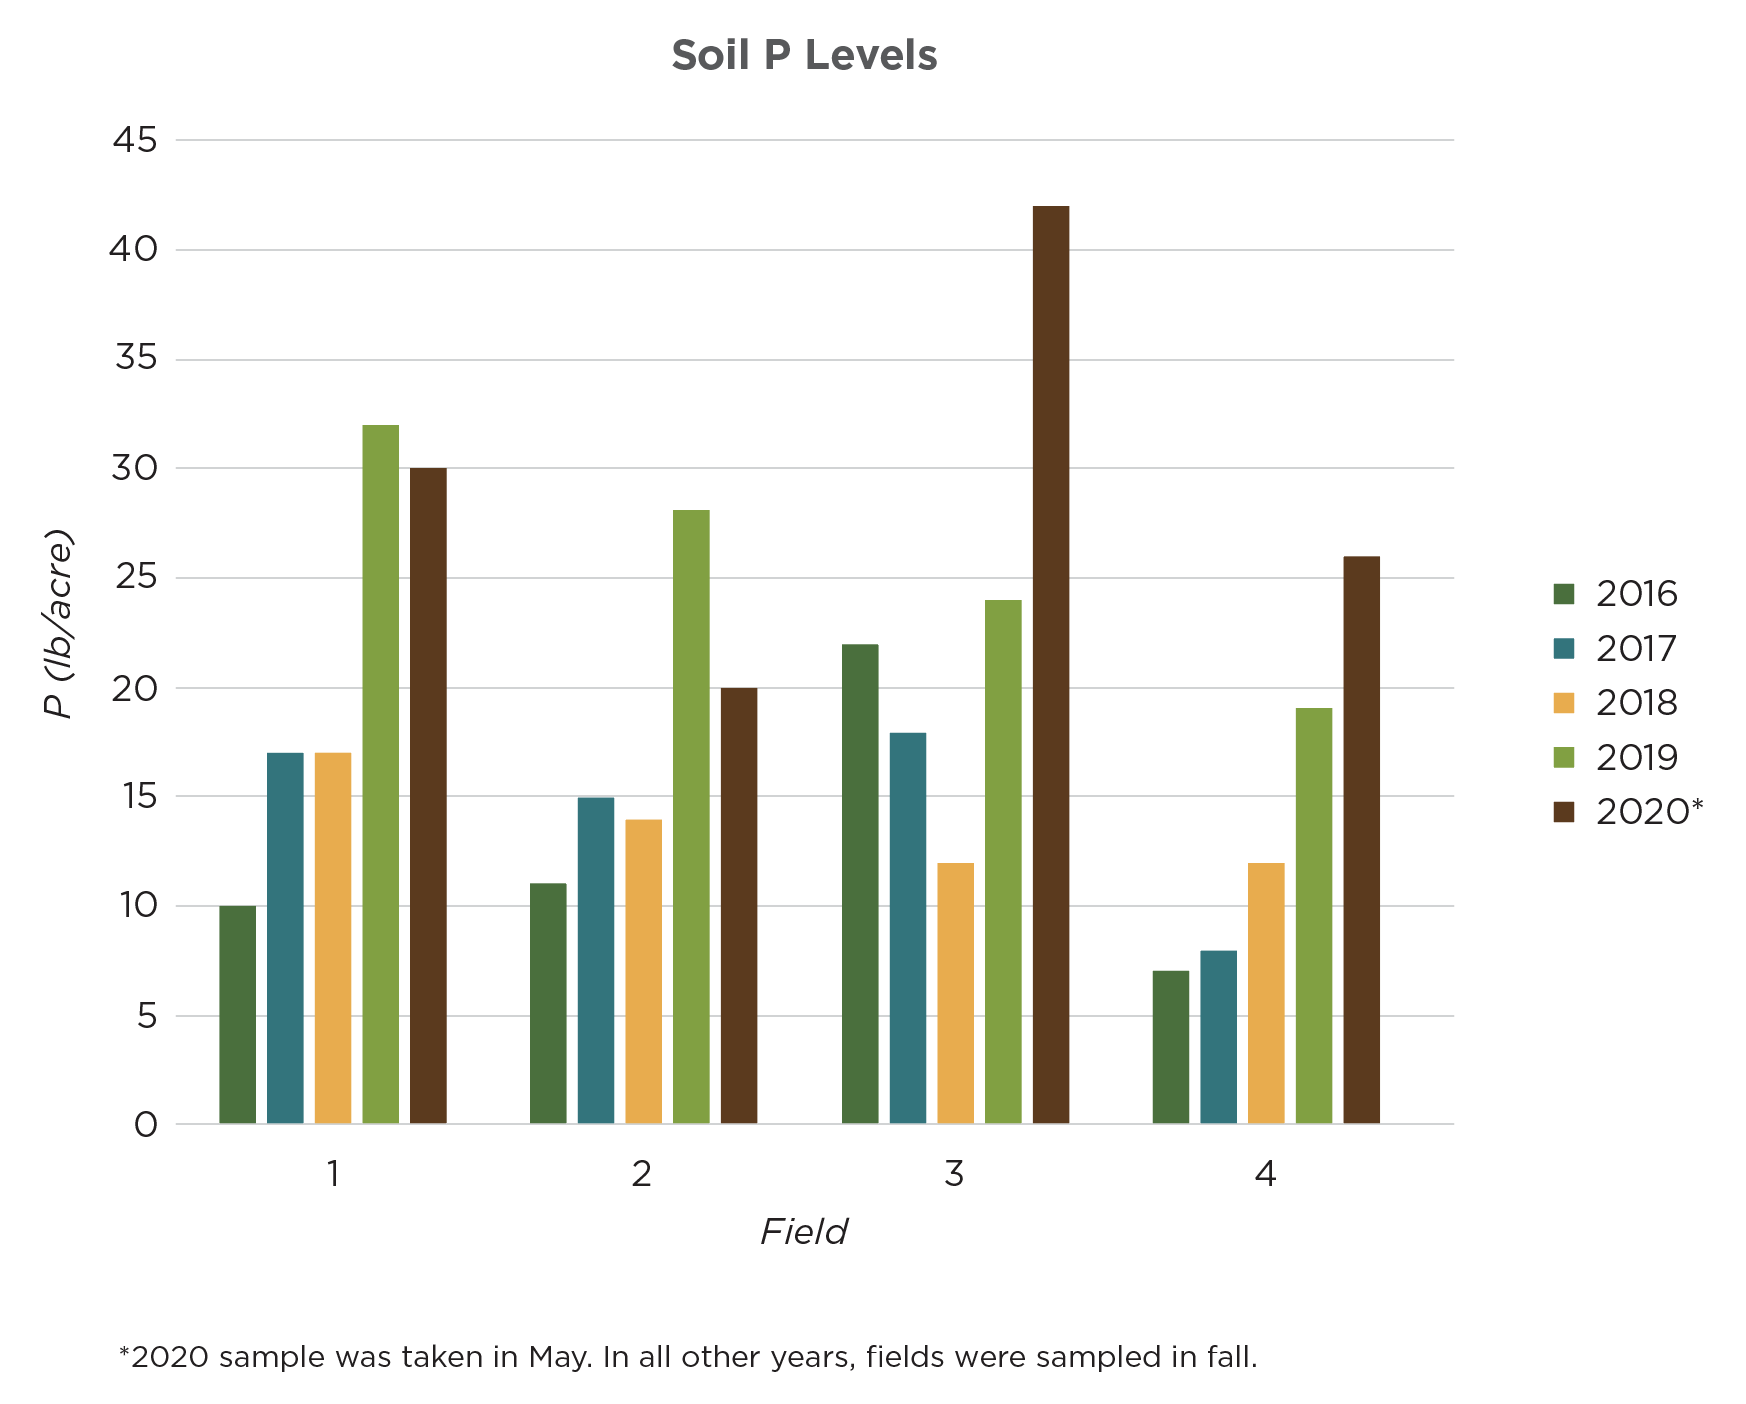 Soil P levels